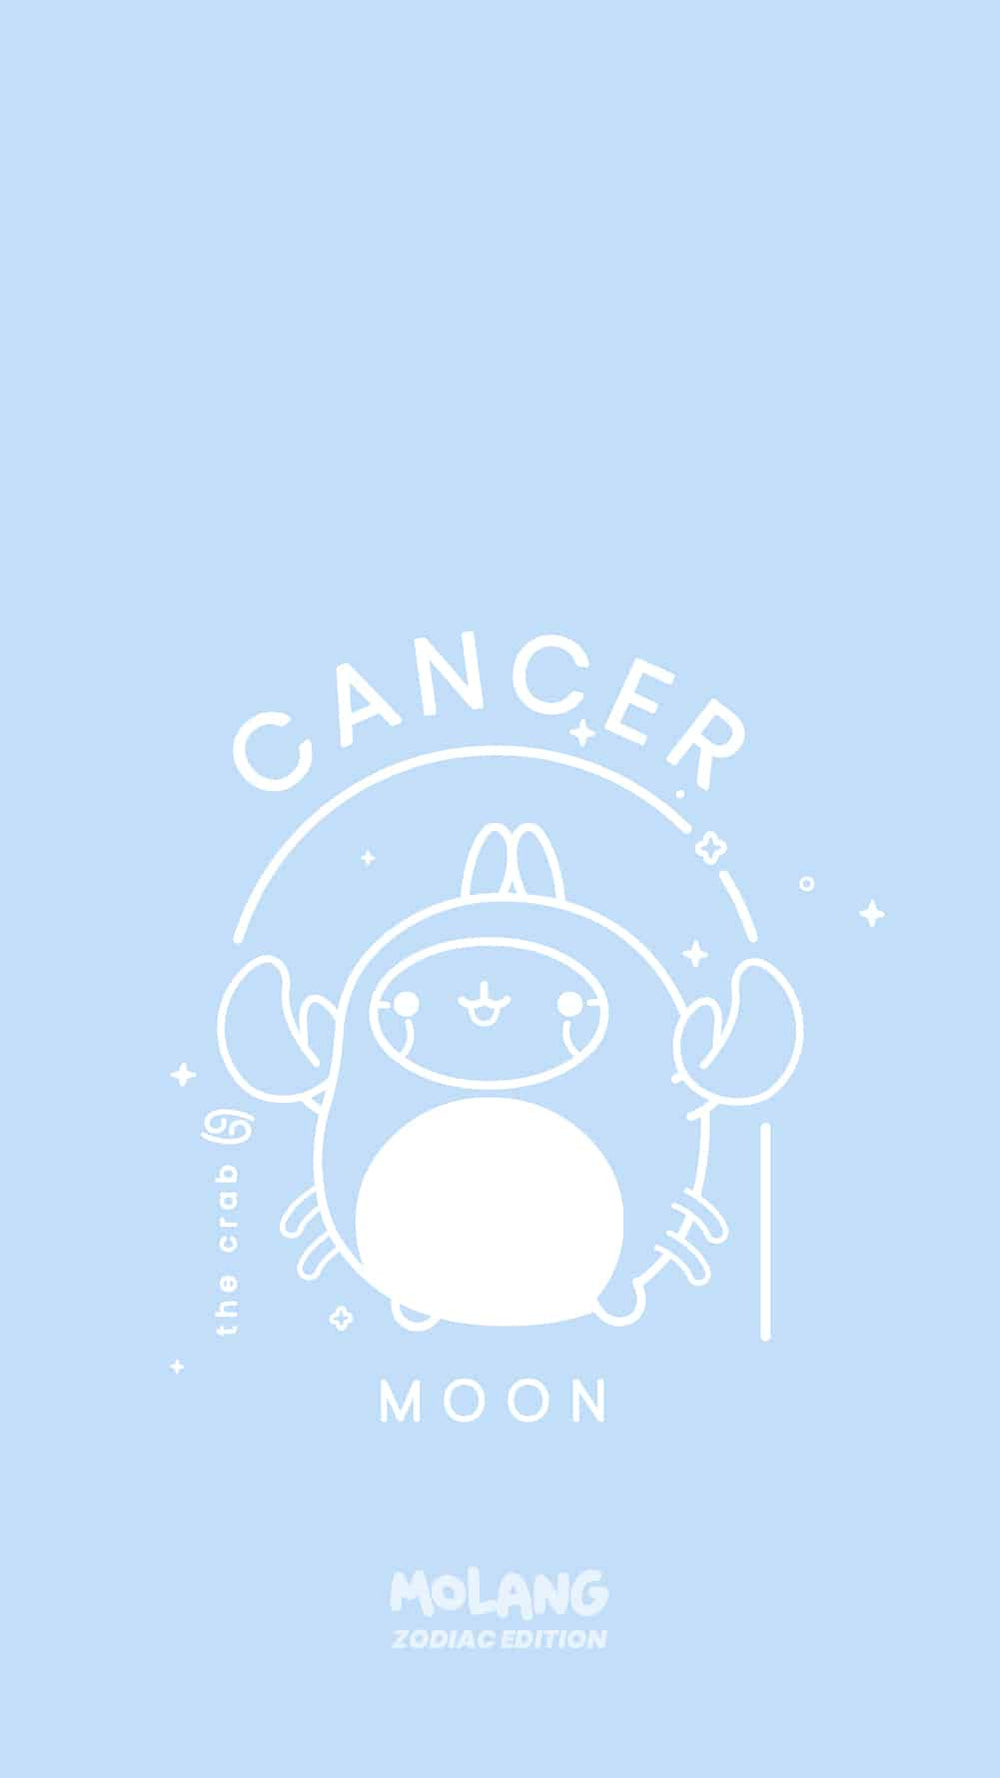 Cancer zodiac sign Royalty Free Vector Image - VectorStock